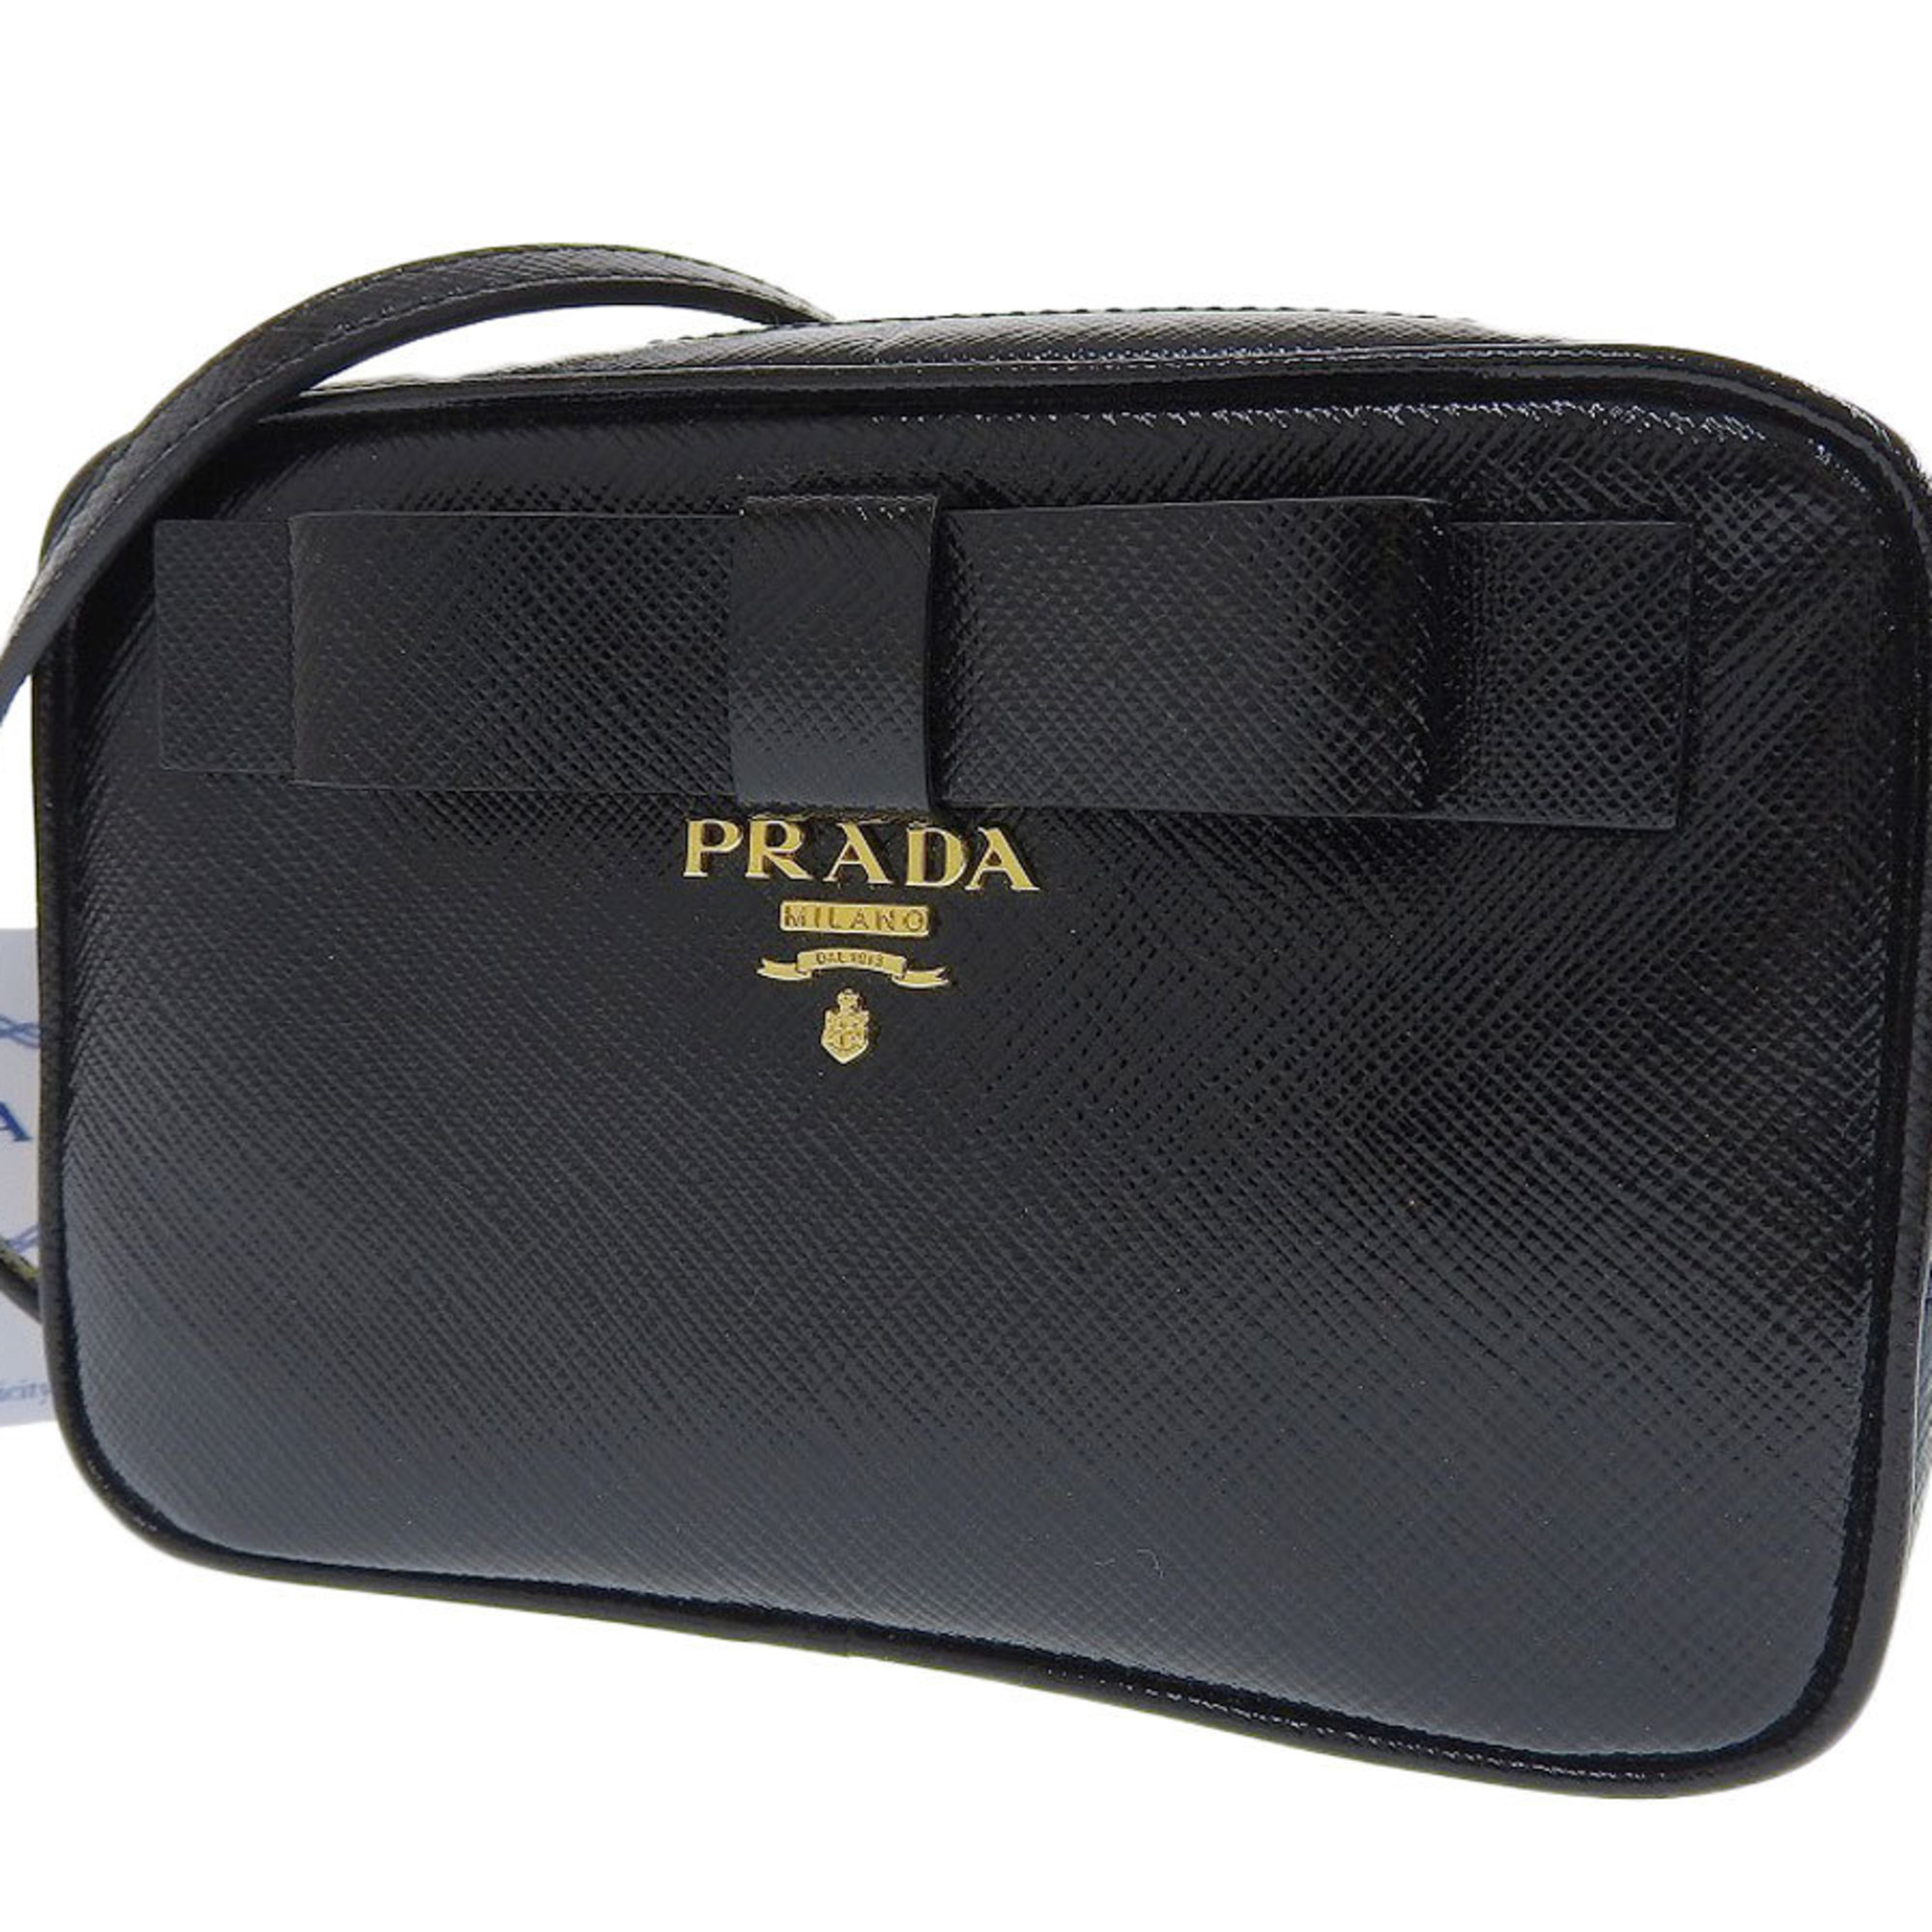 PRADA Prada mini shoulder bag 2WAY Saffiano black gold metal